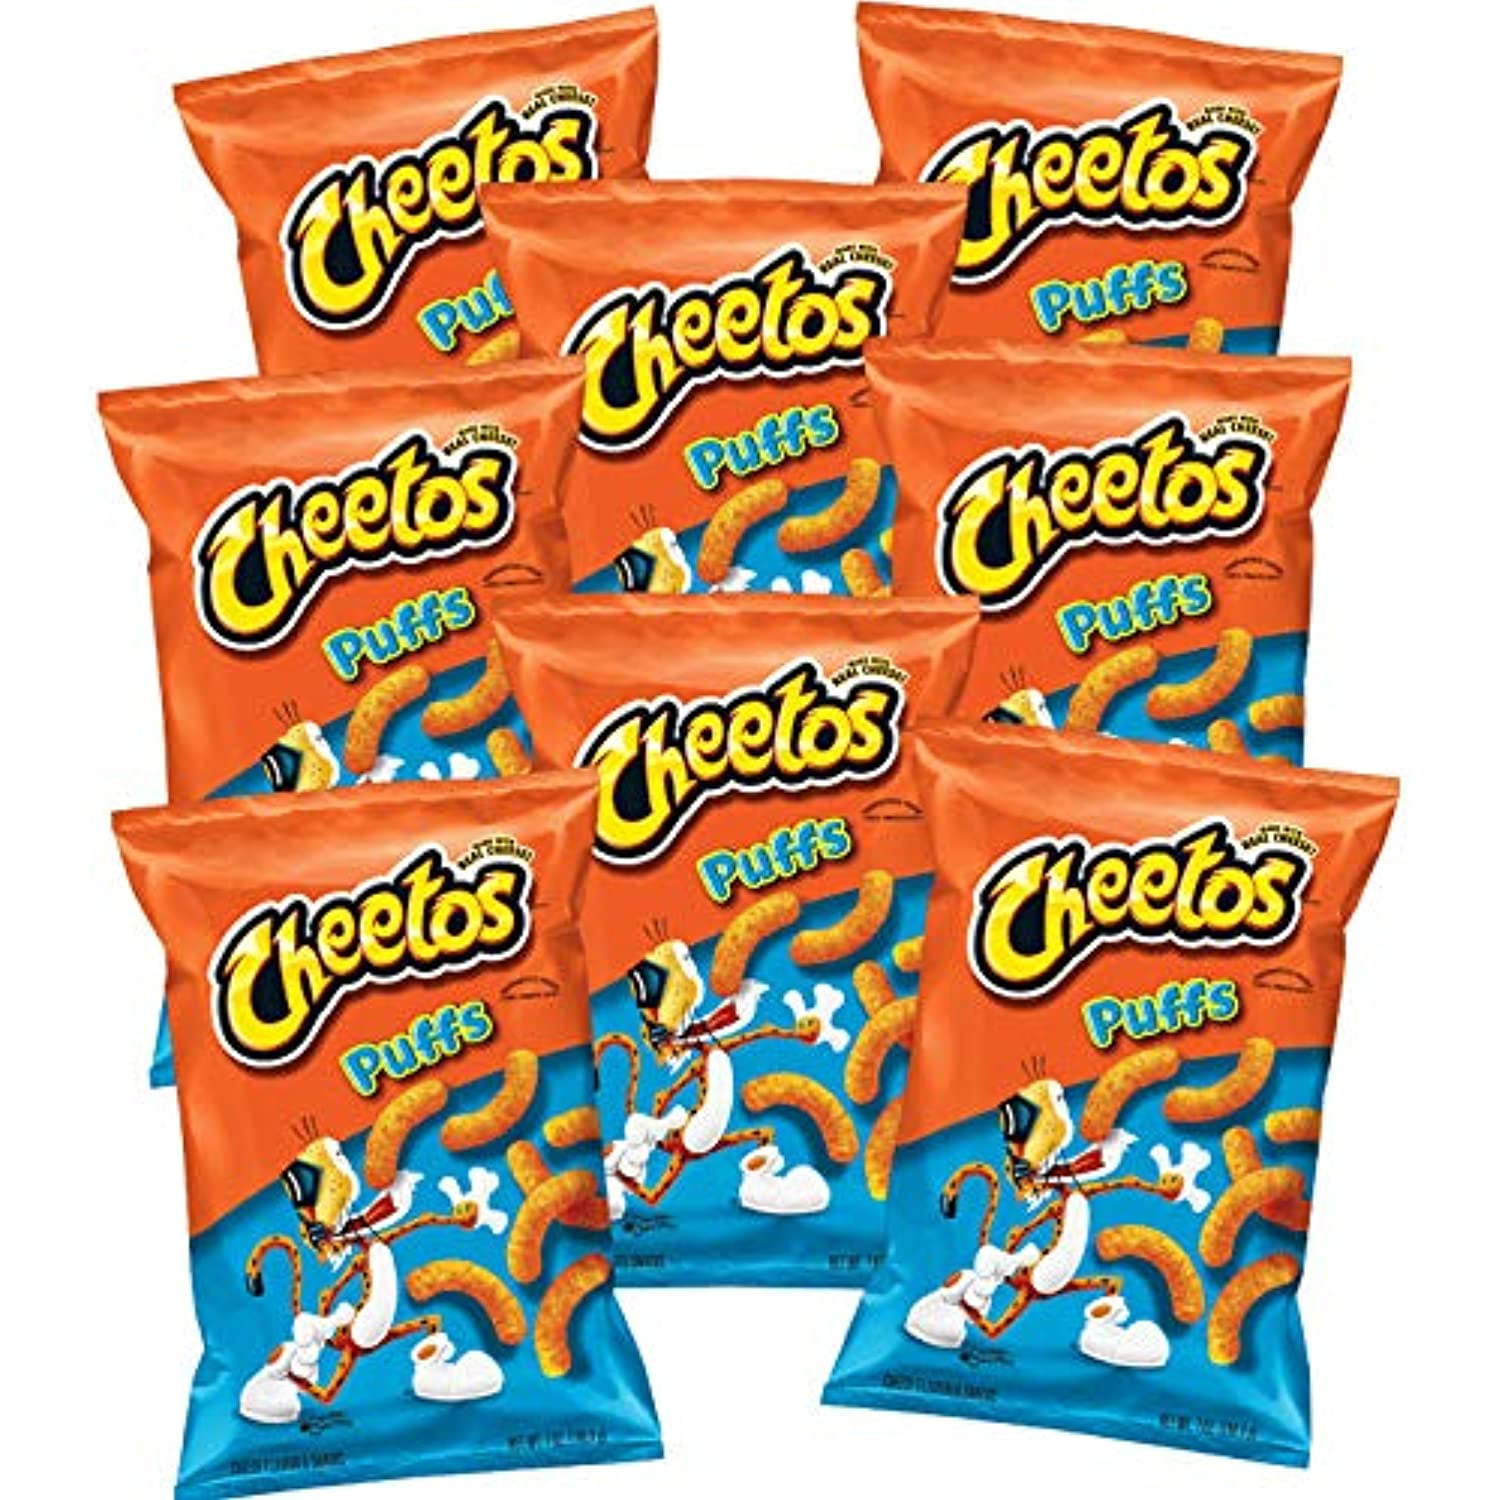 Cheetos Cheetos Puffs Cheese Flavored Snacks 0.875 Oz | Big Lots